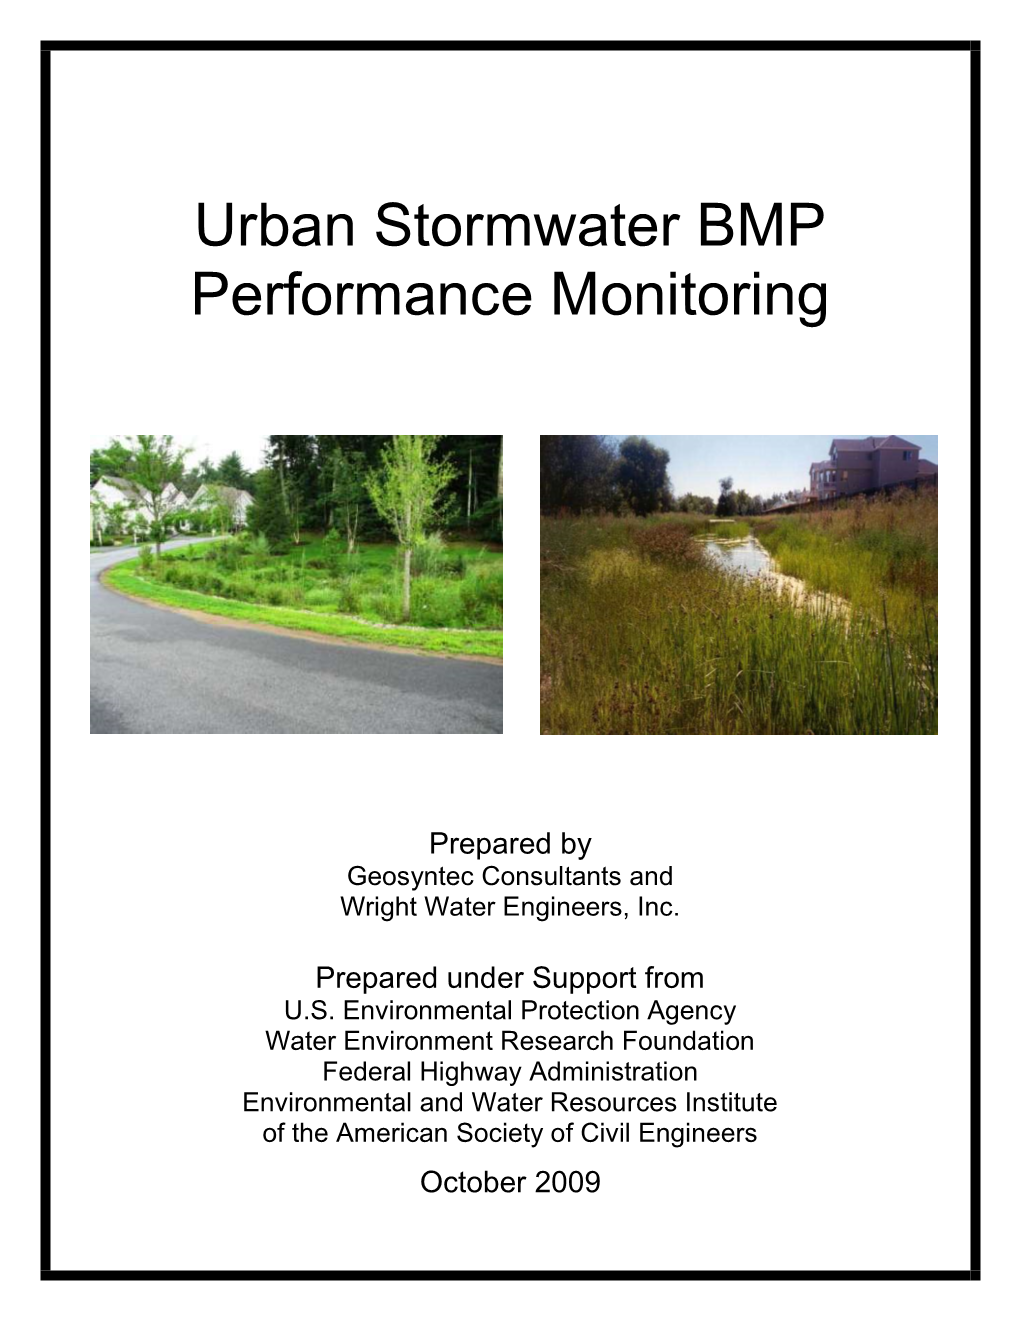 Urban Stormwater BMP Monitoring Manual 2009